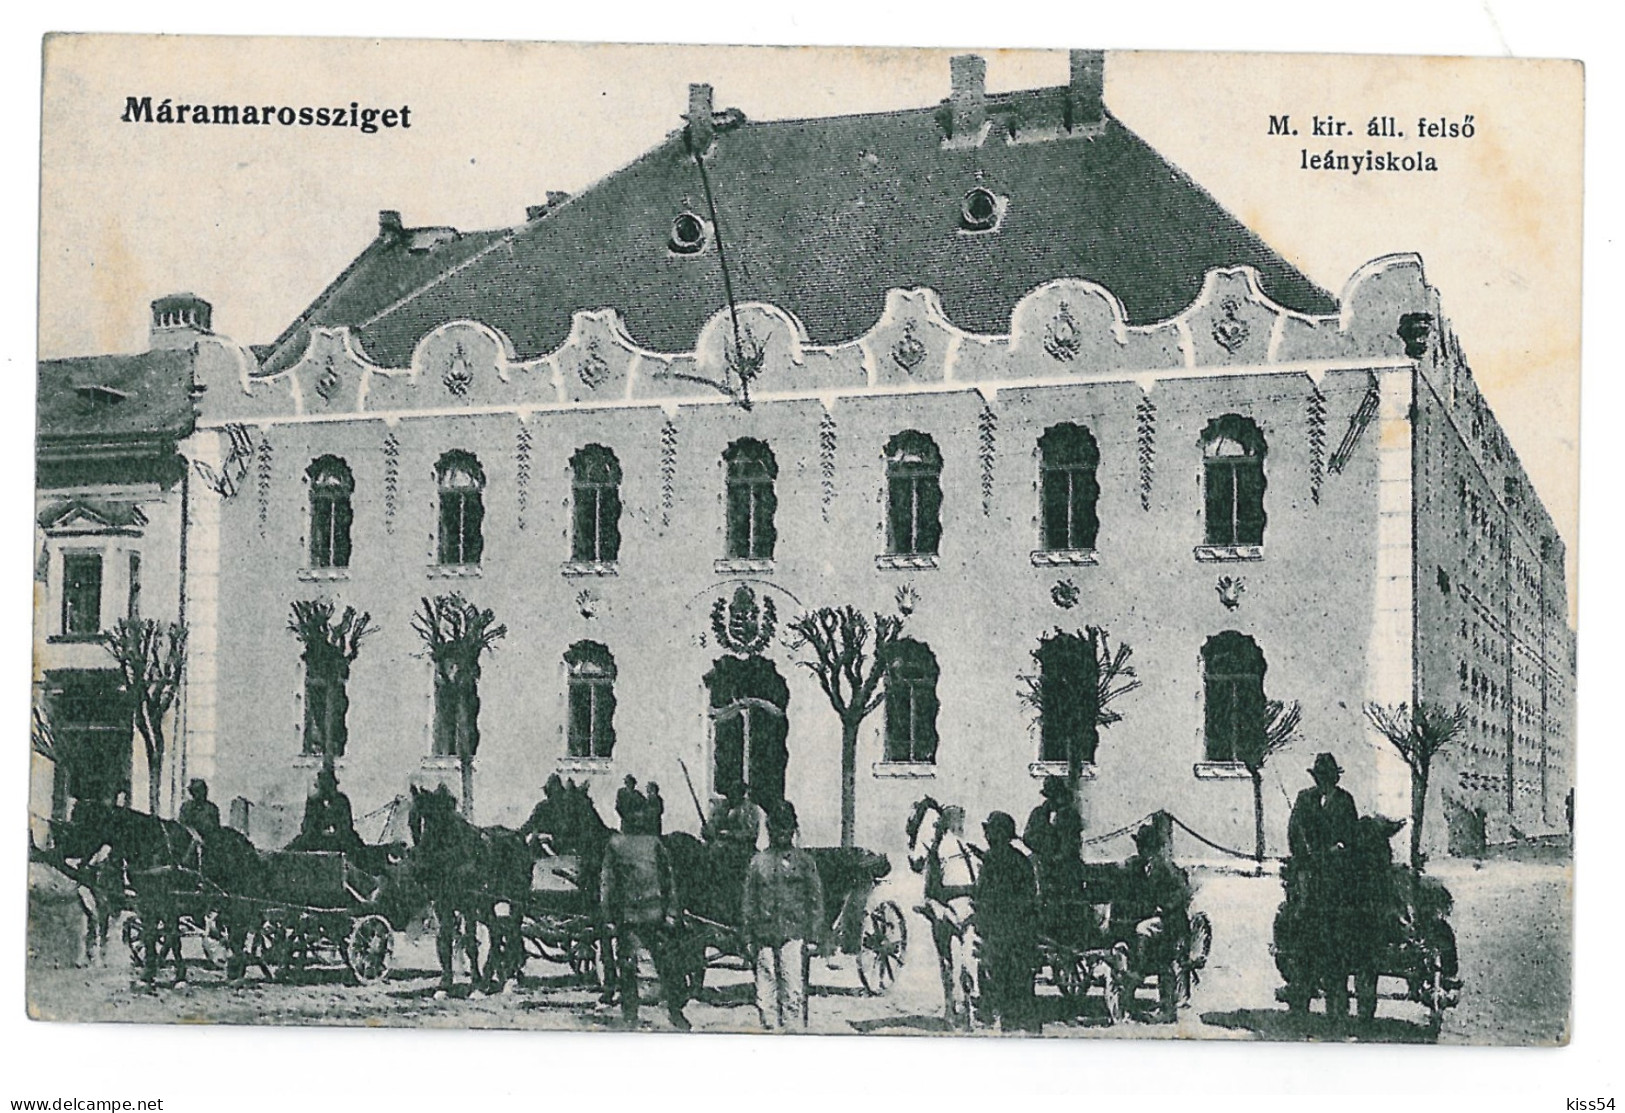 RO 38 - 11052 SIGHET, Maramures, Market, Carriages, Romania - Old Postcard, CENSOR - Used - Roumanie